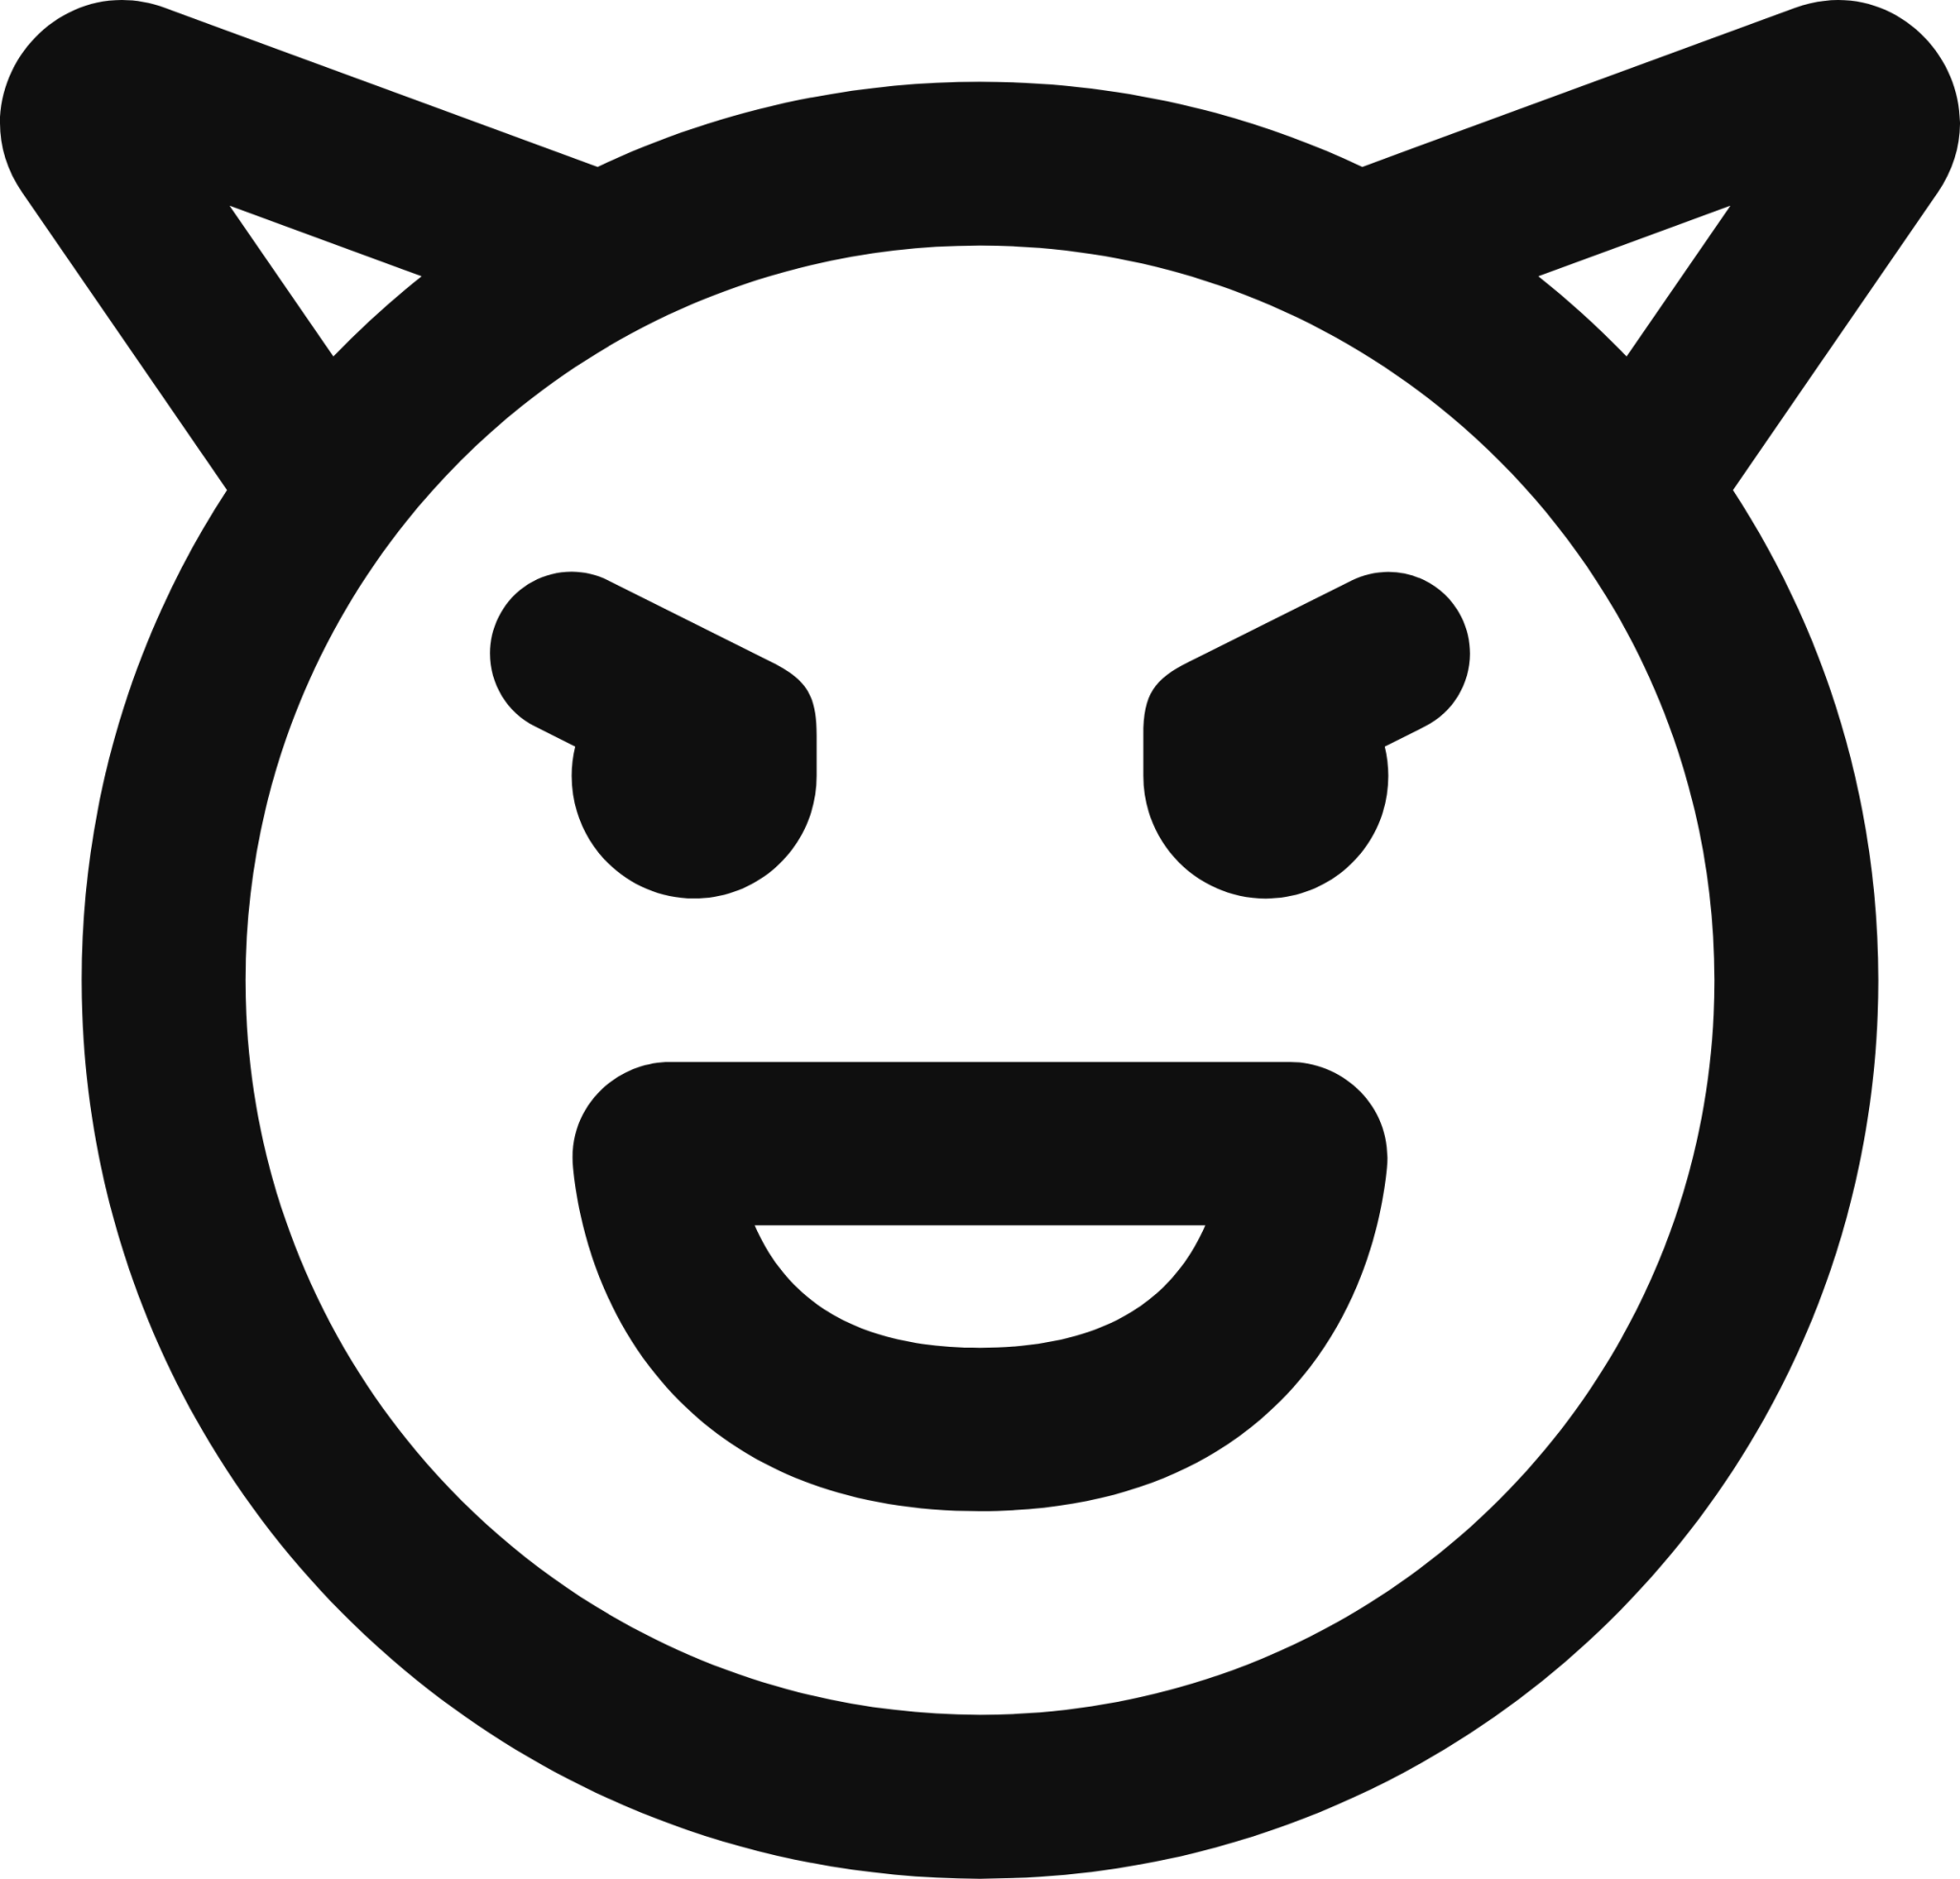 emoji devil laugh icon